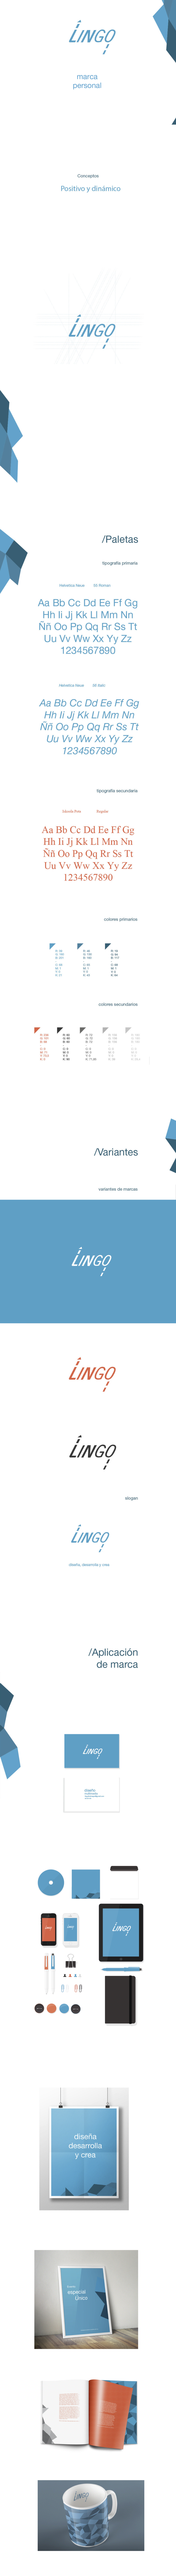 Marca personal - Lingo -1